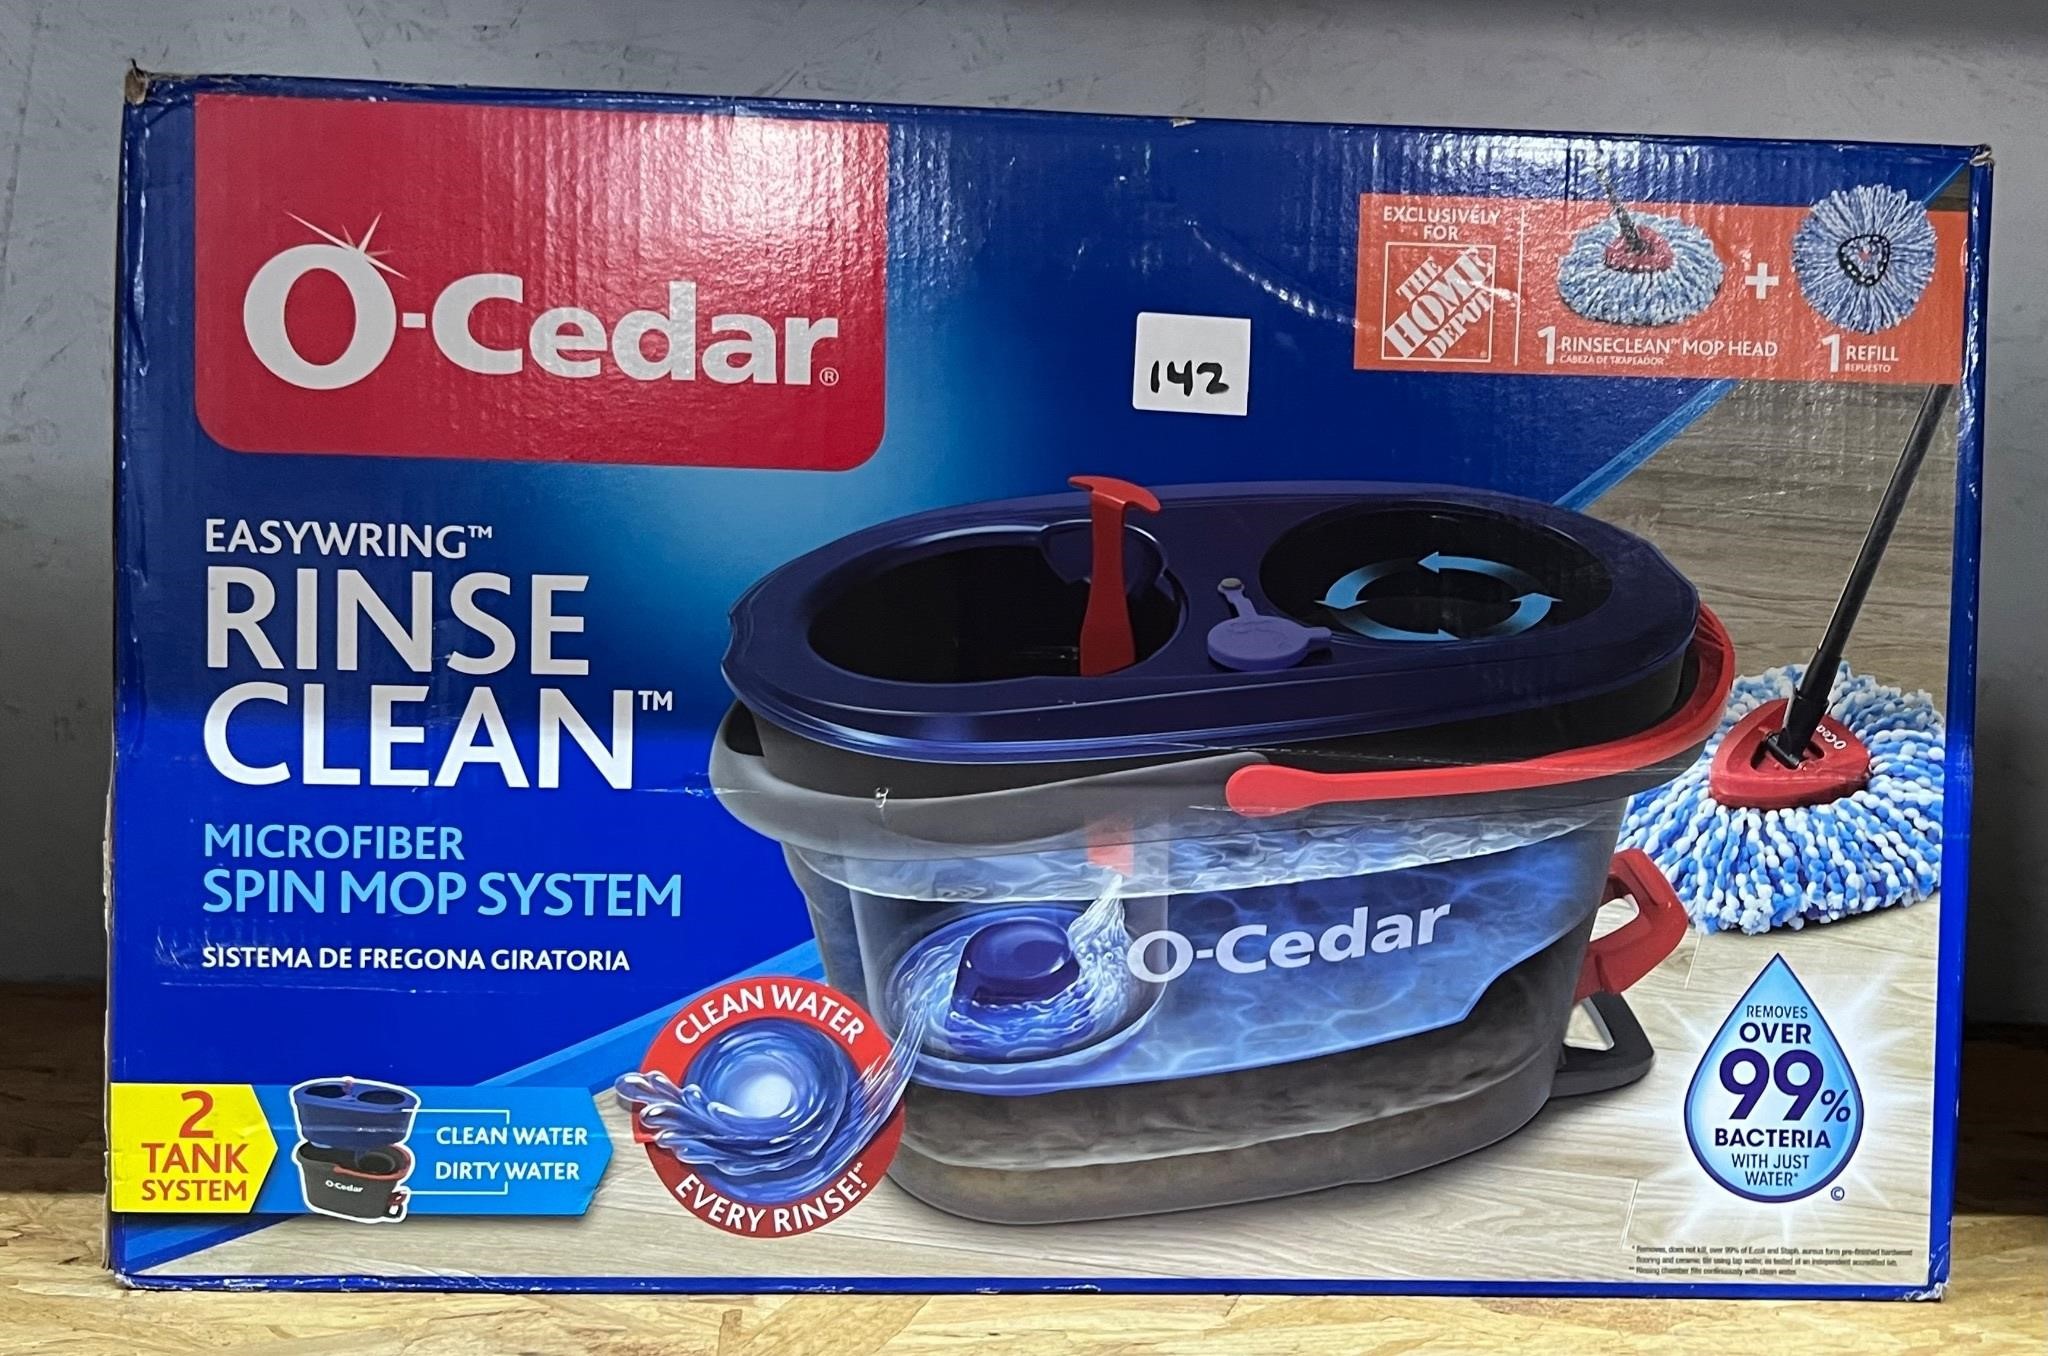 O Cedar Easy Wring Microfiber Spin Mop System